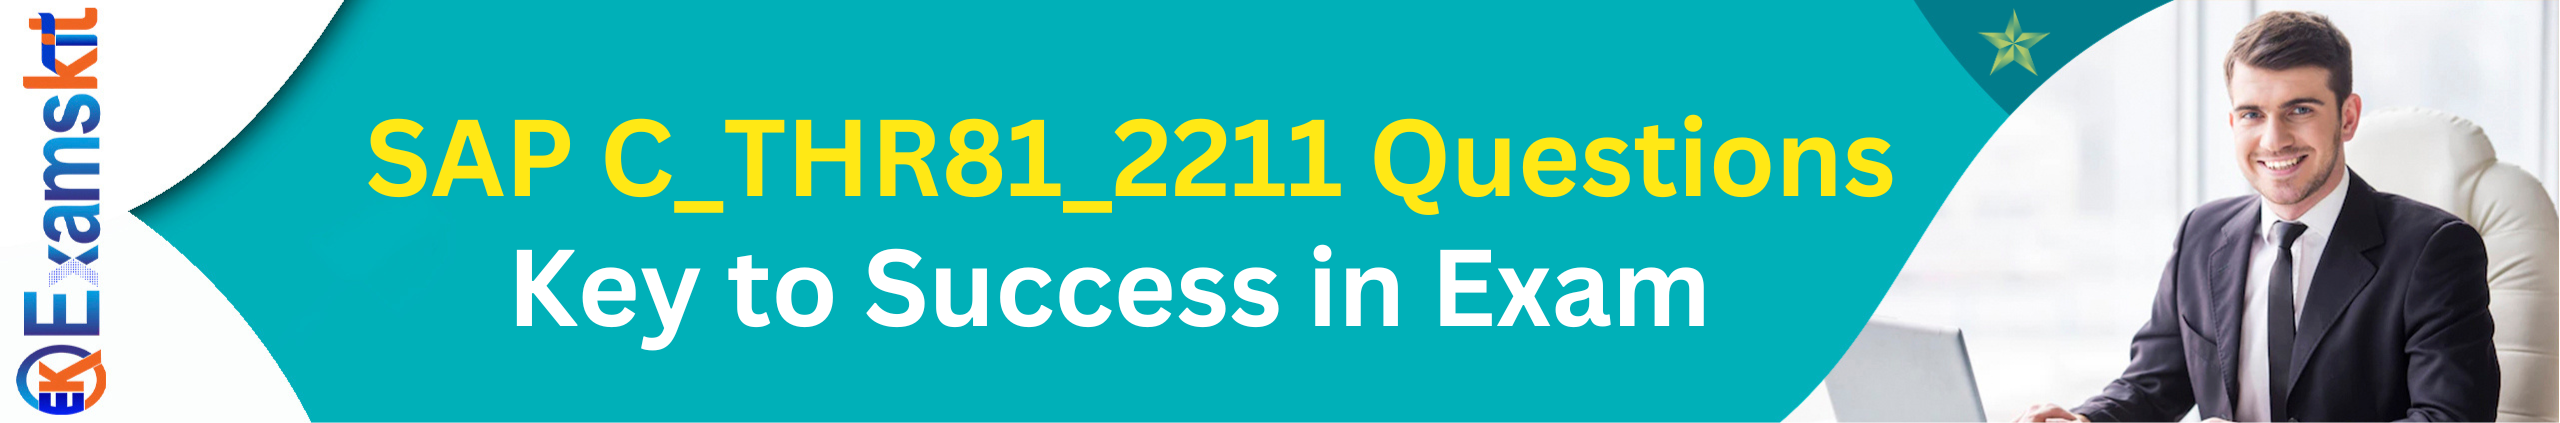 SAP C_THR81_2211 Questions For SuccessFactors Employee Central Exam